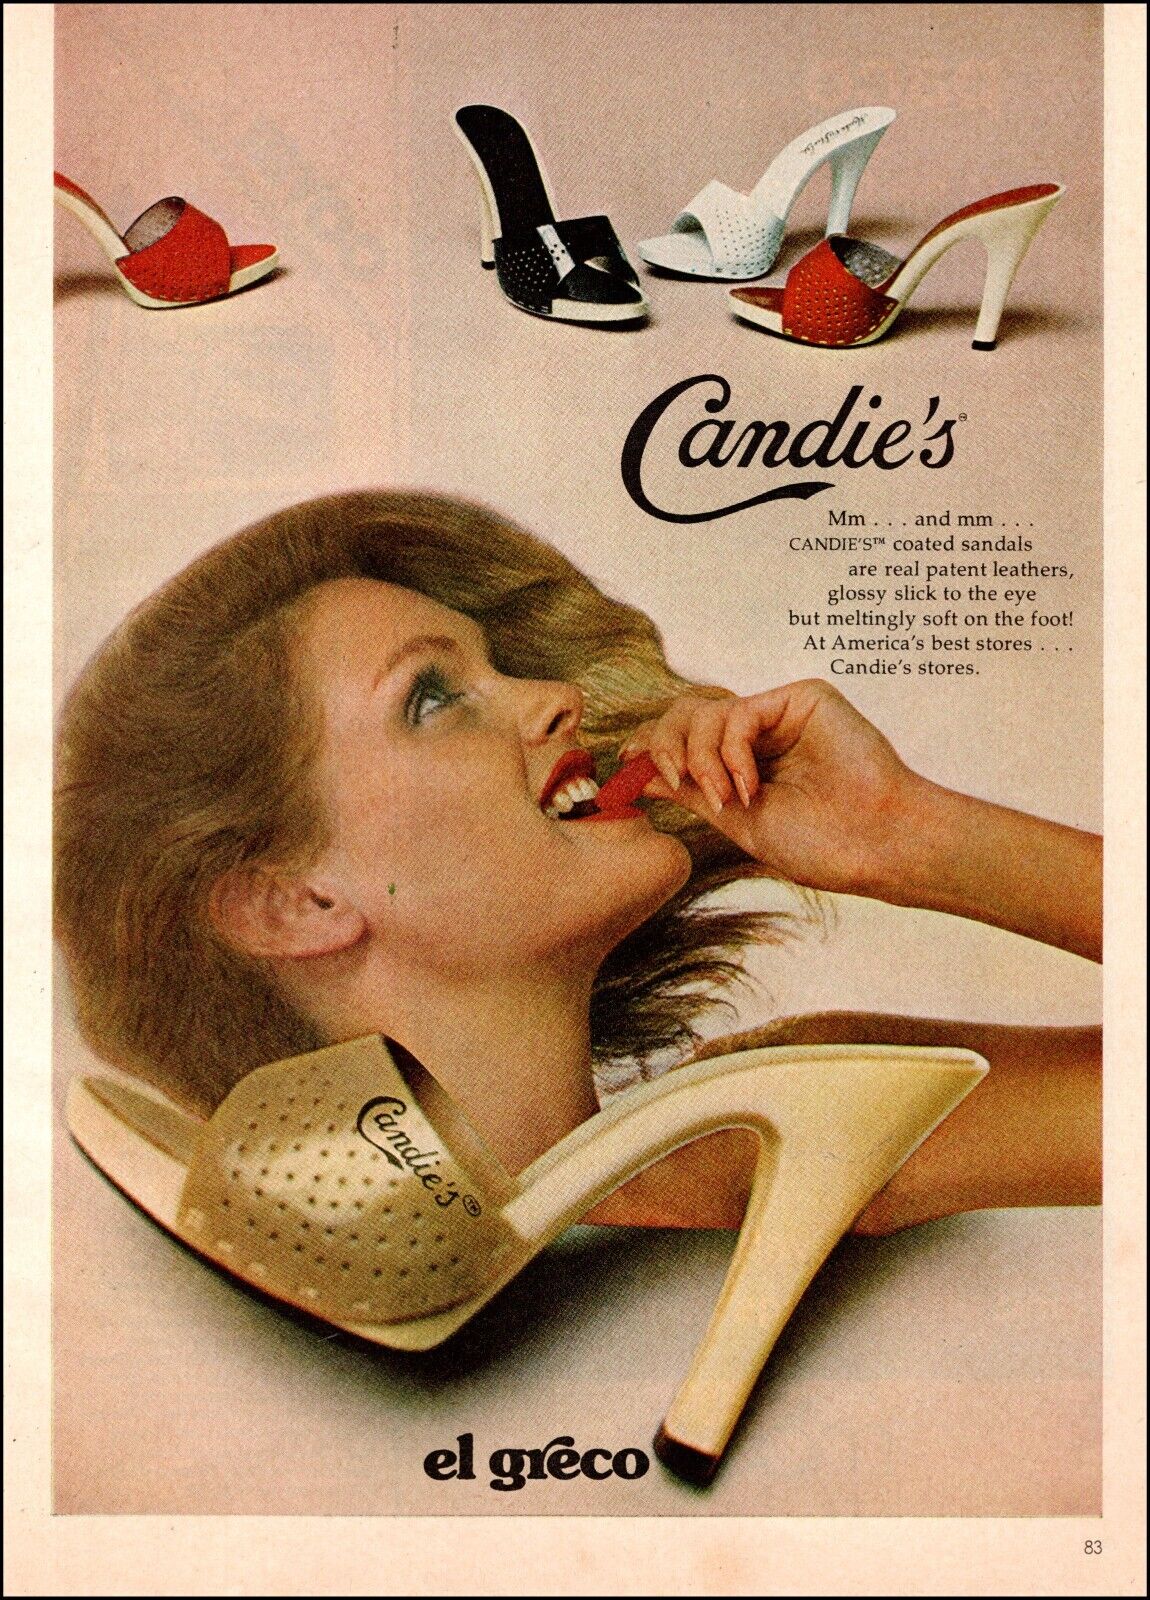 Candies Shoes 1970s Sale Online - www.bridgepartnersllc.com 1692653328